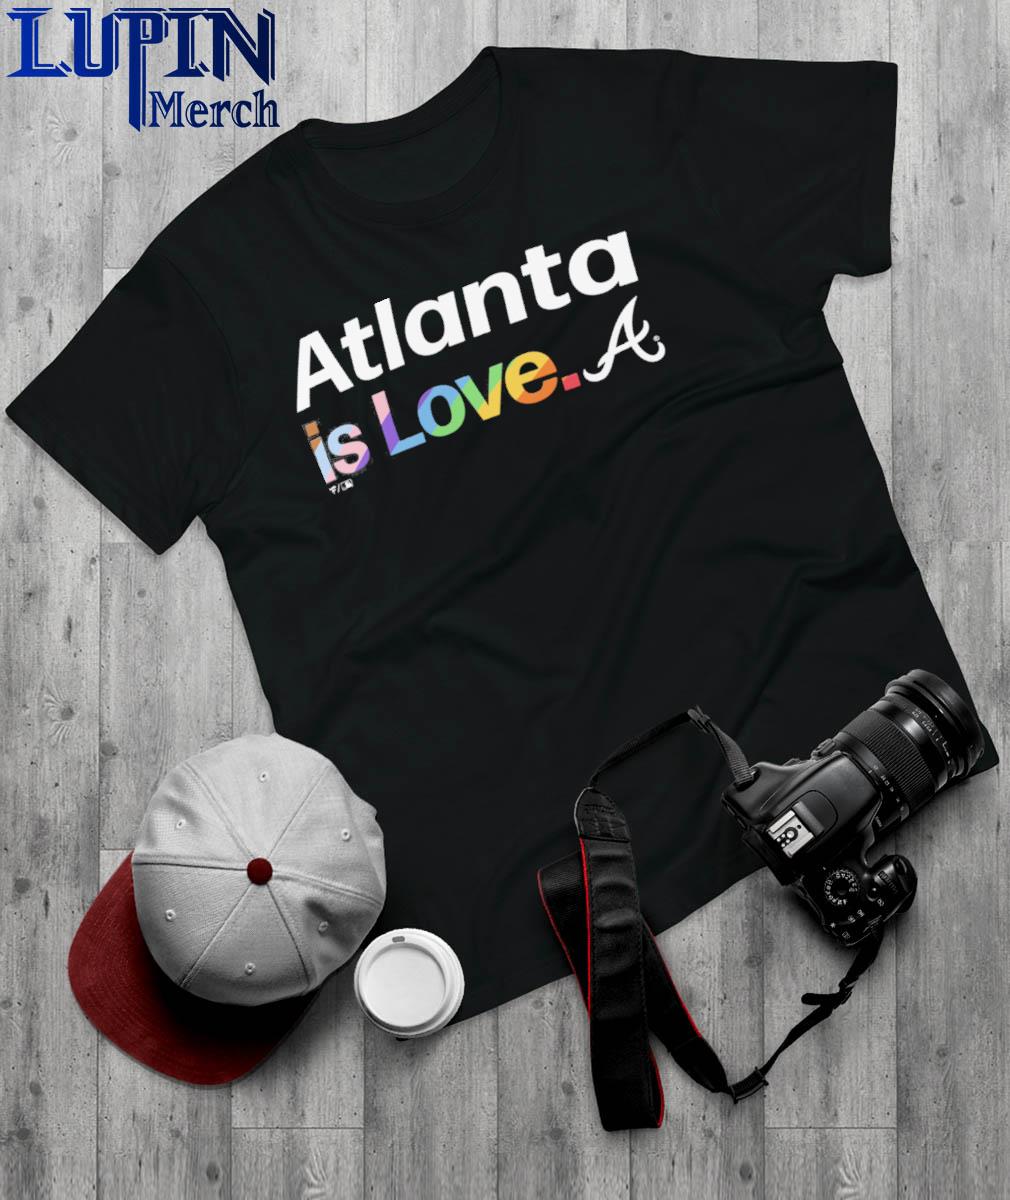 atlanta braves pride shirt